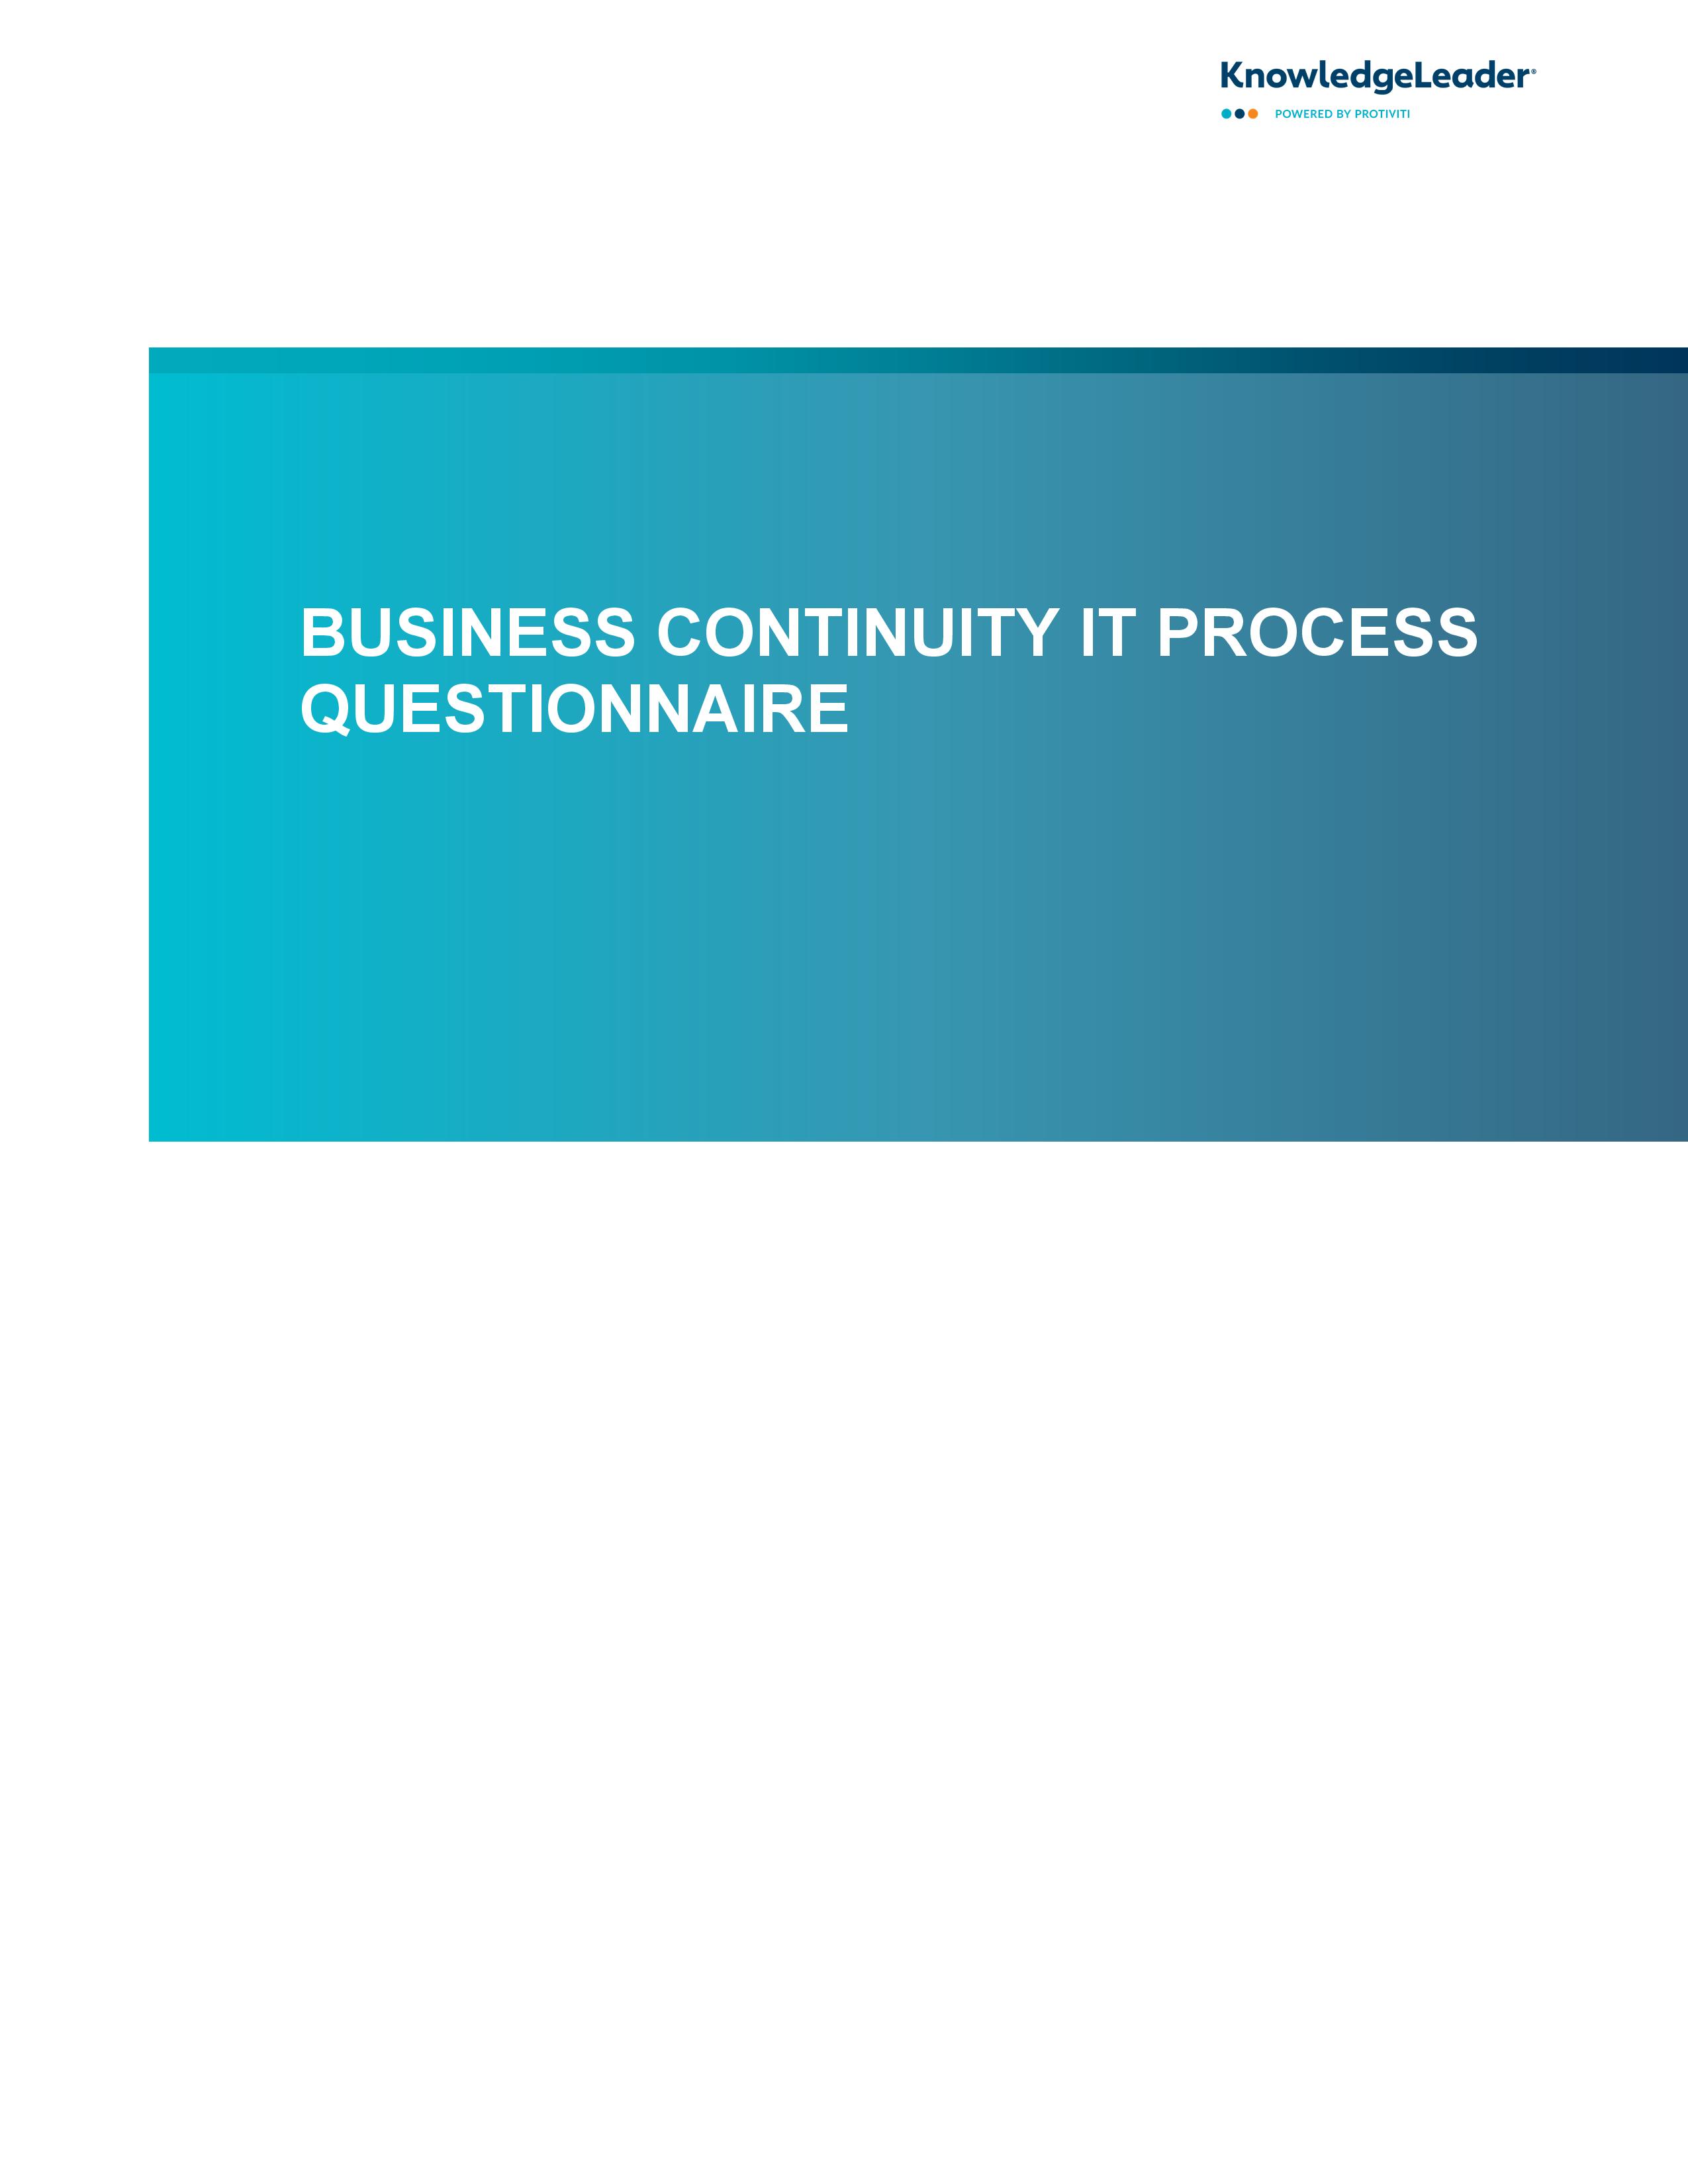 Business Continuity IT Process Questionnaire